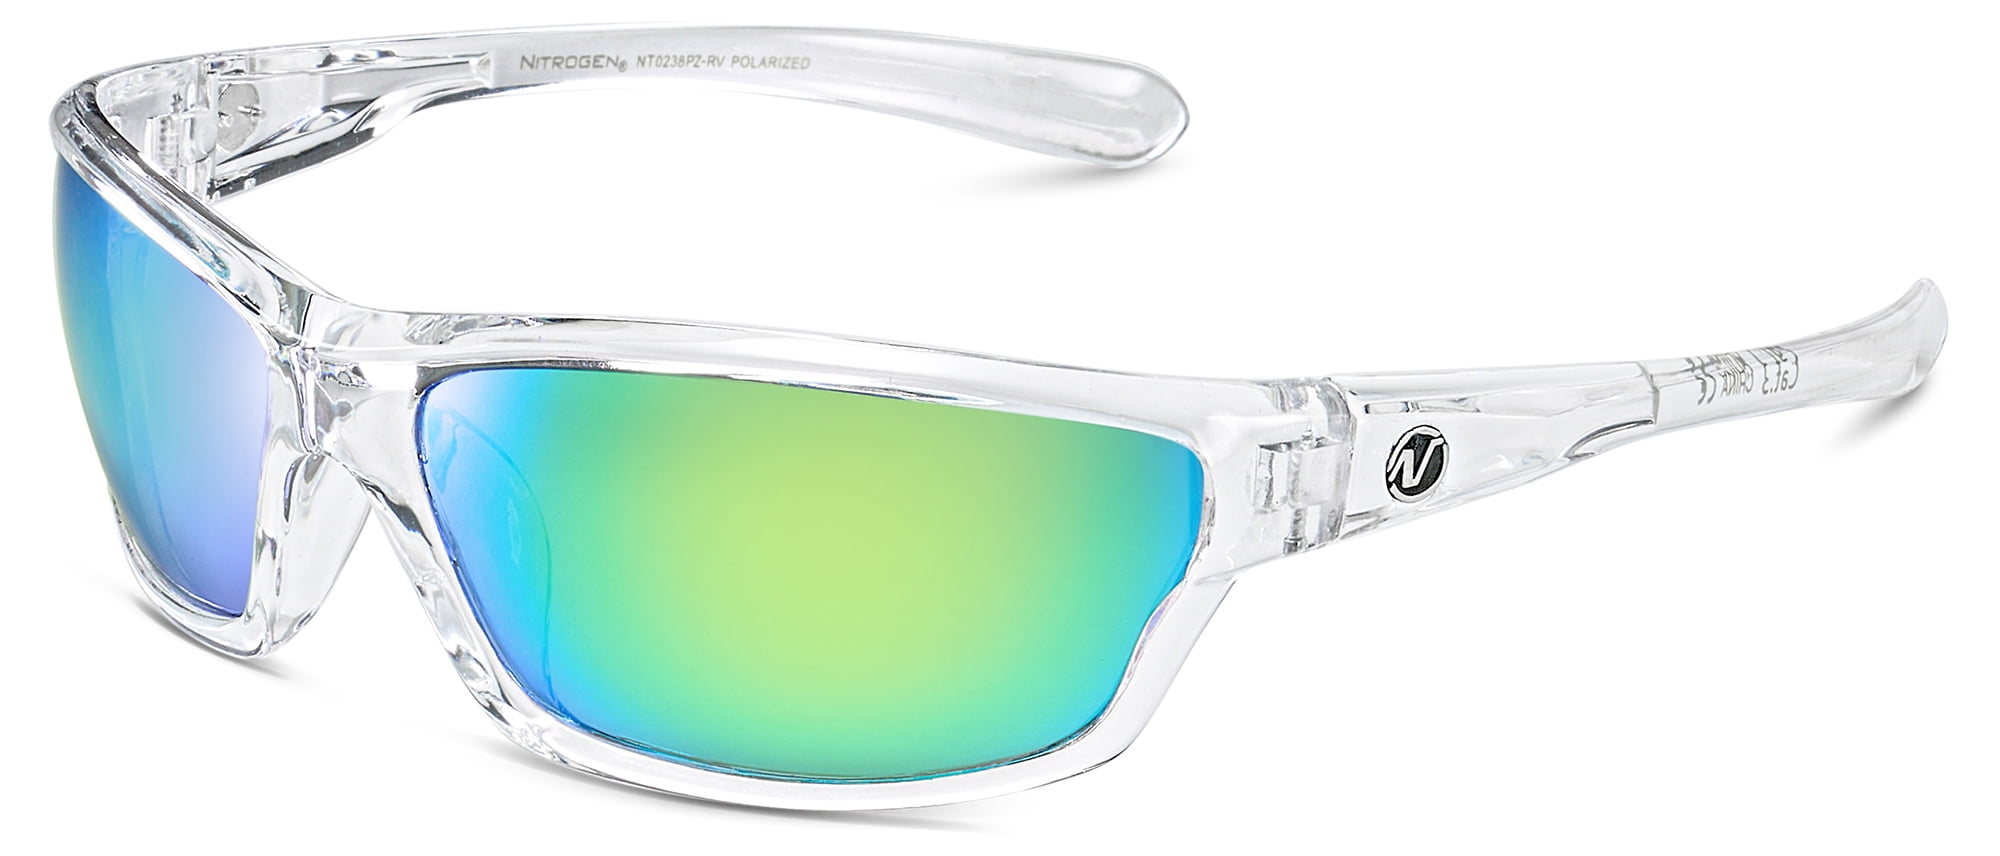 Polarized Wrap Around Sport Sunglasses for Men Women - Driving